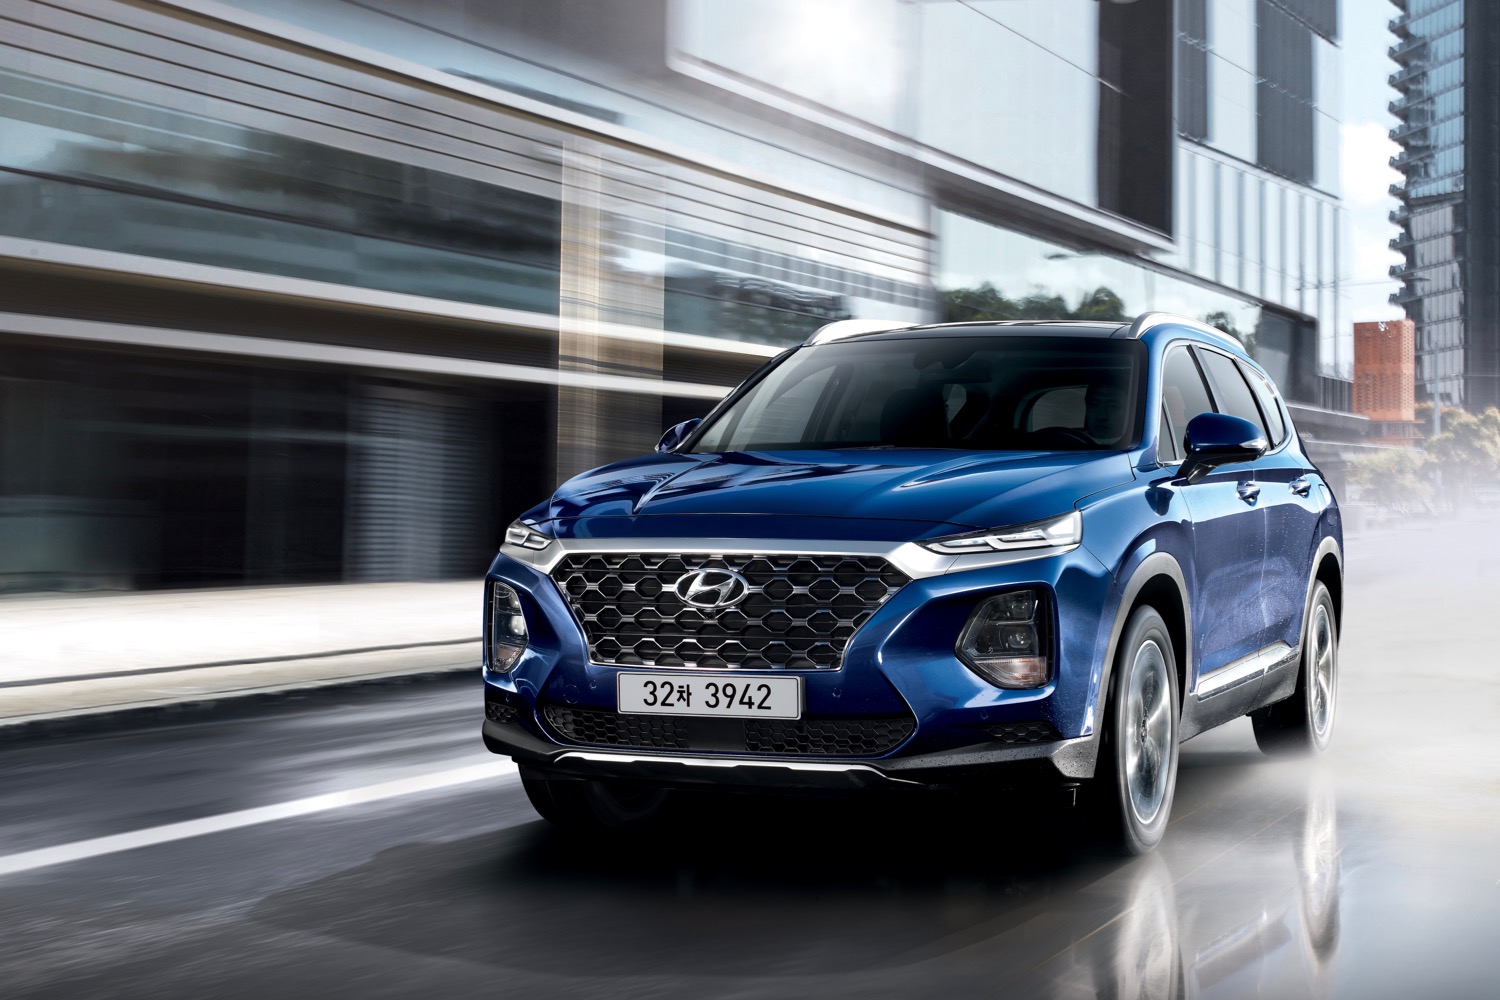 The All-New 2019 Santa Fe Makes its United States Debut at the New York  International Auto Show - Hyundai Newsroom